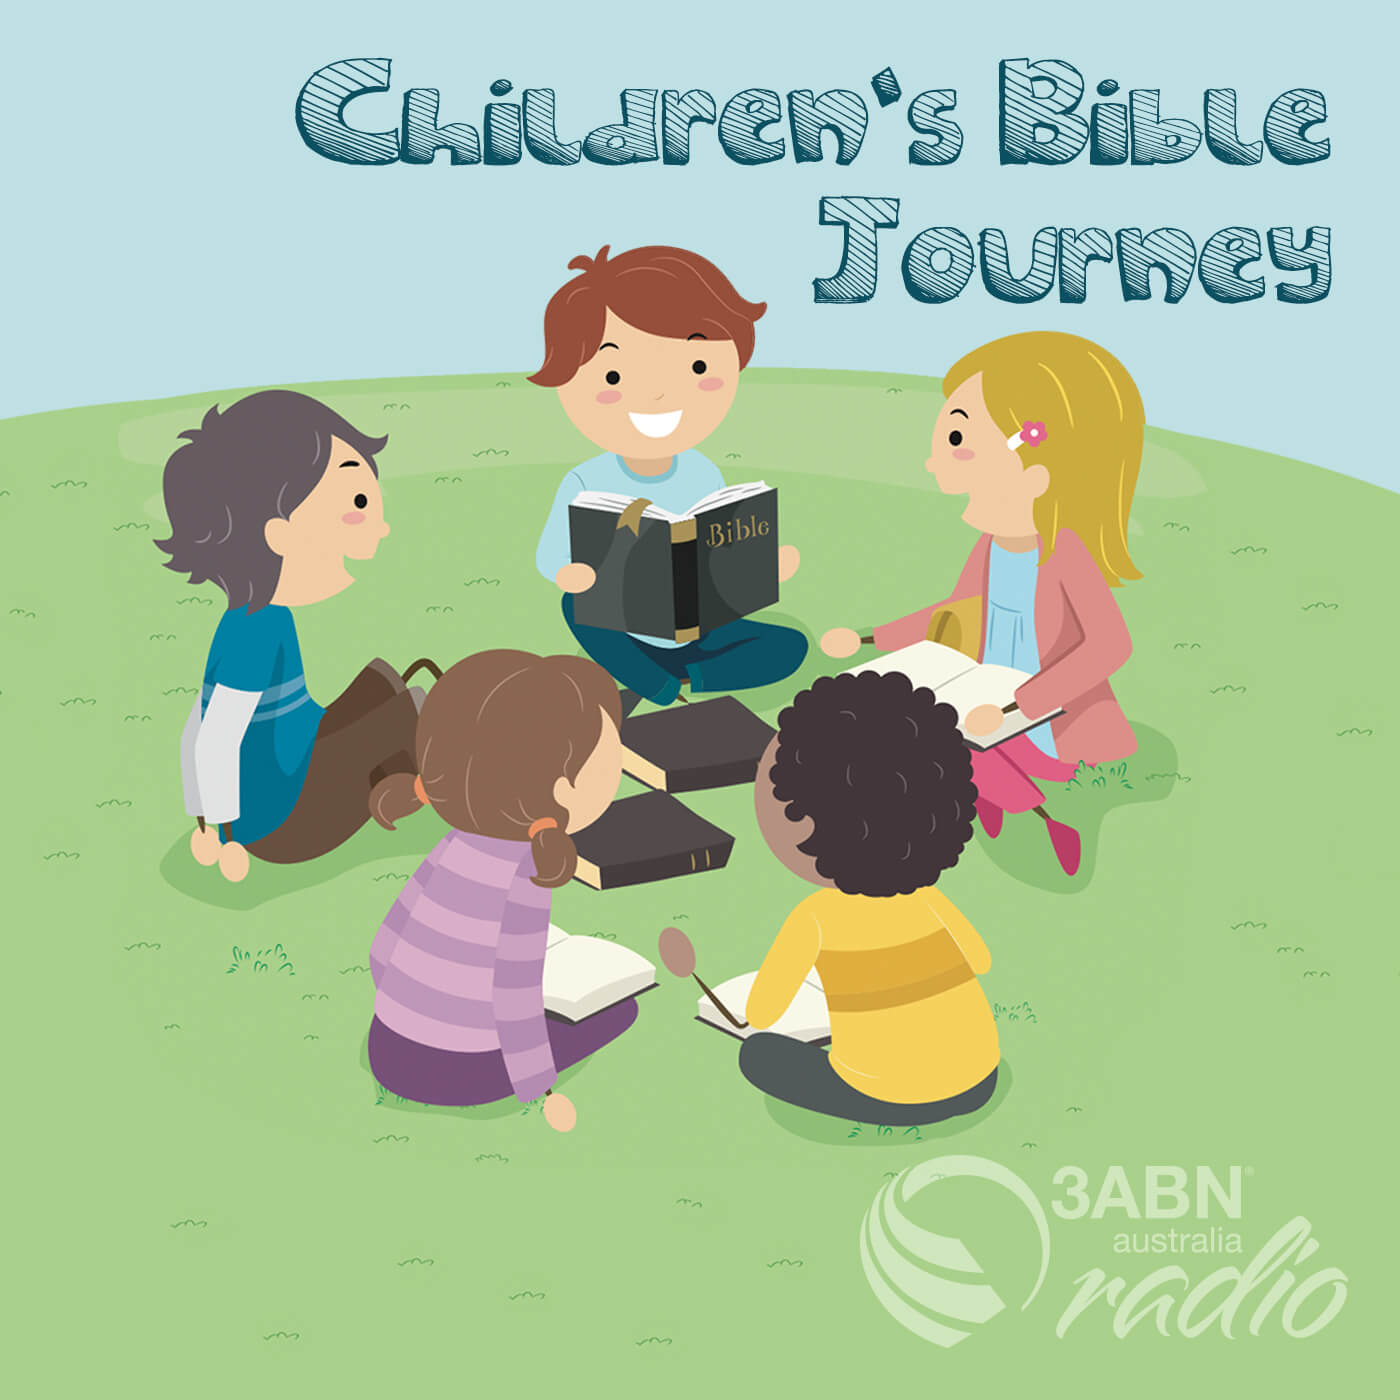 Children's Bible Journey - 2119